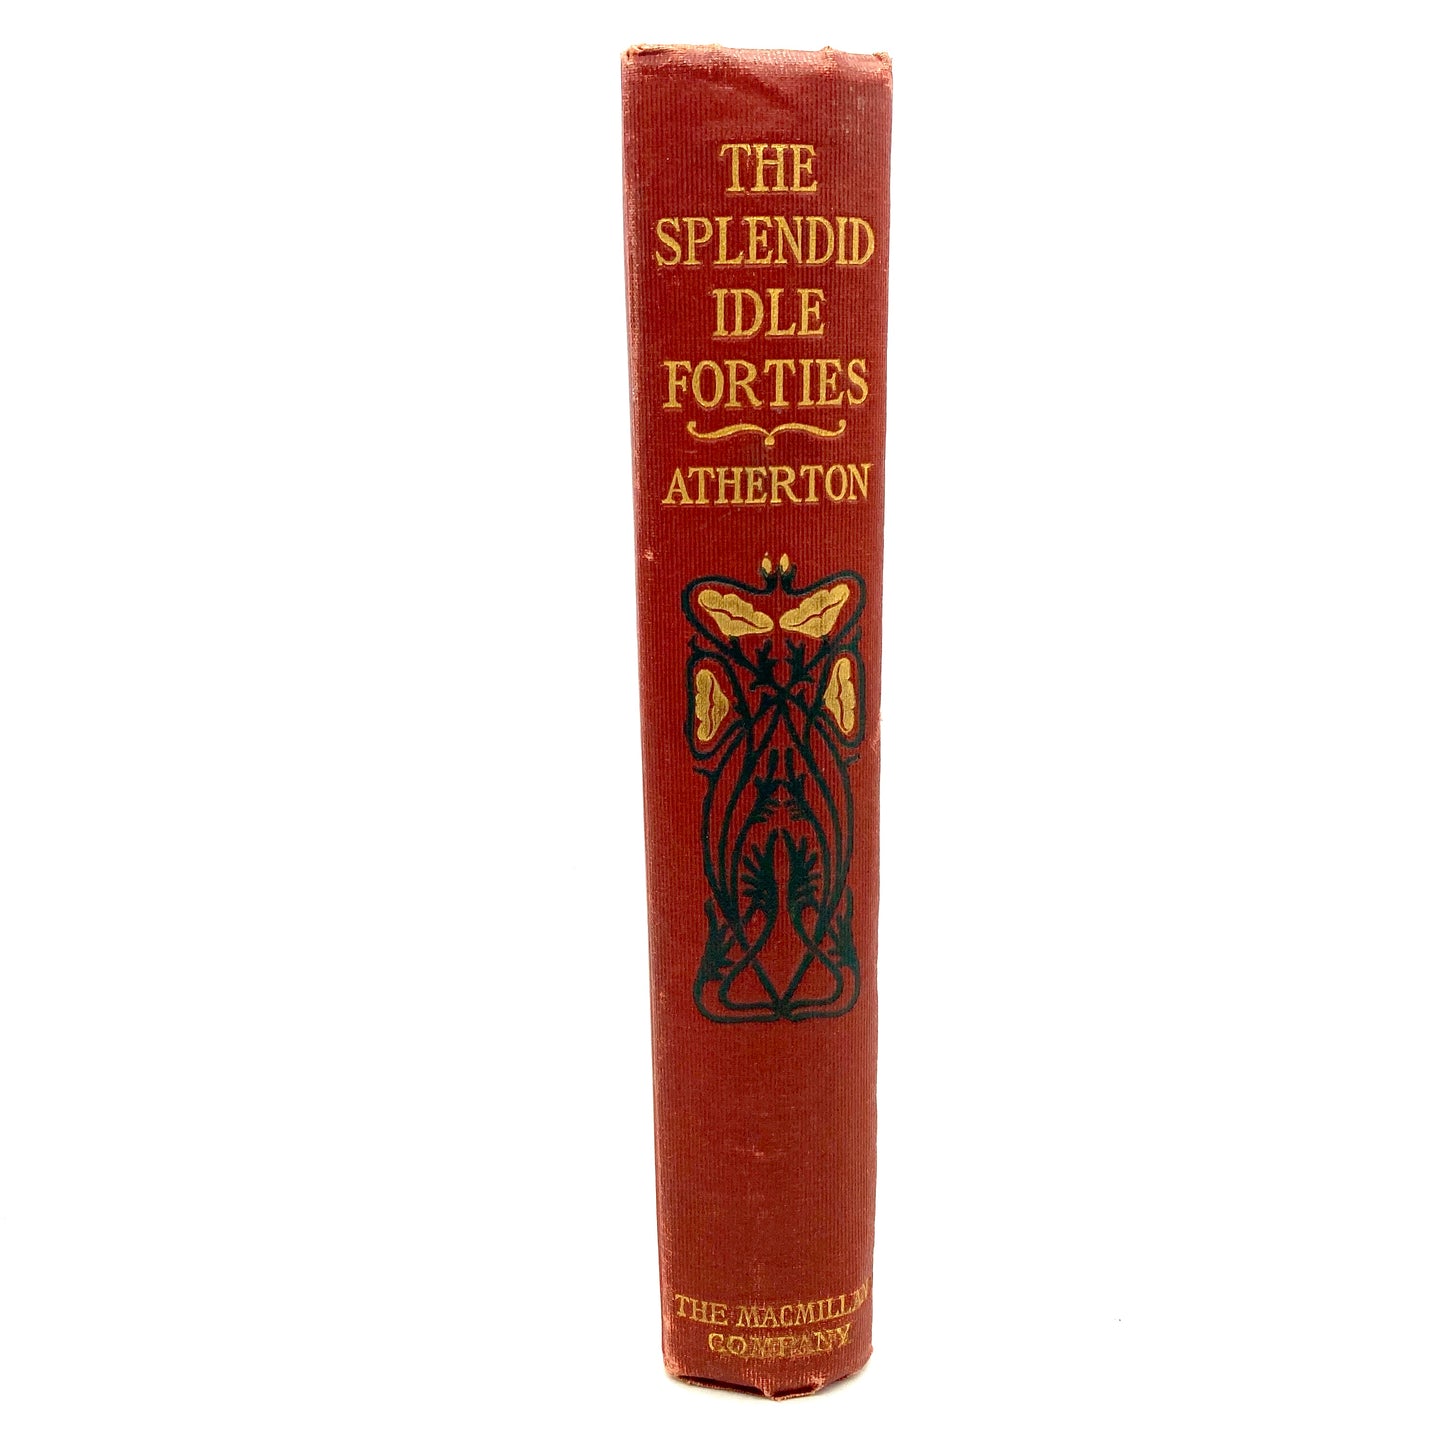 ATHERTON, Gertude "The Splendid Idle Forties" [Macmillan, 1902]